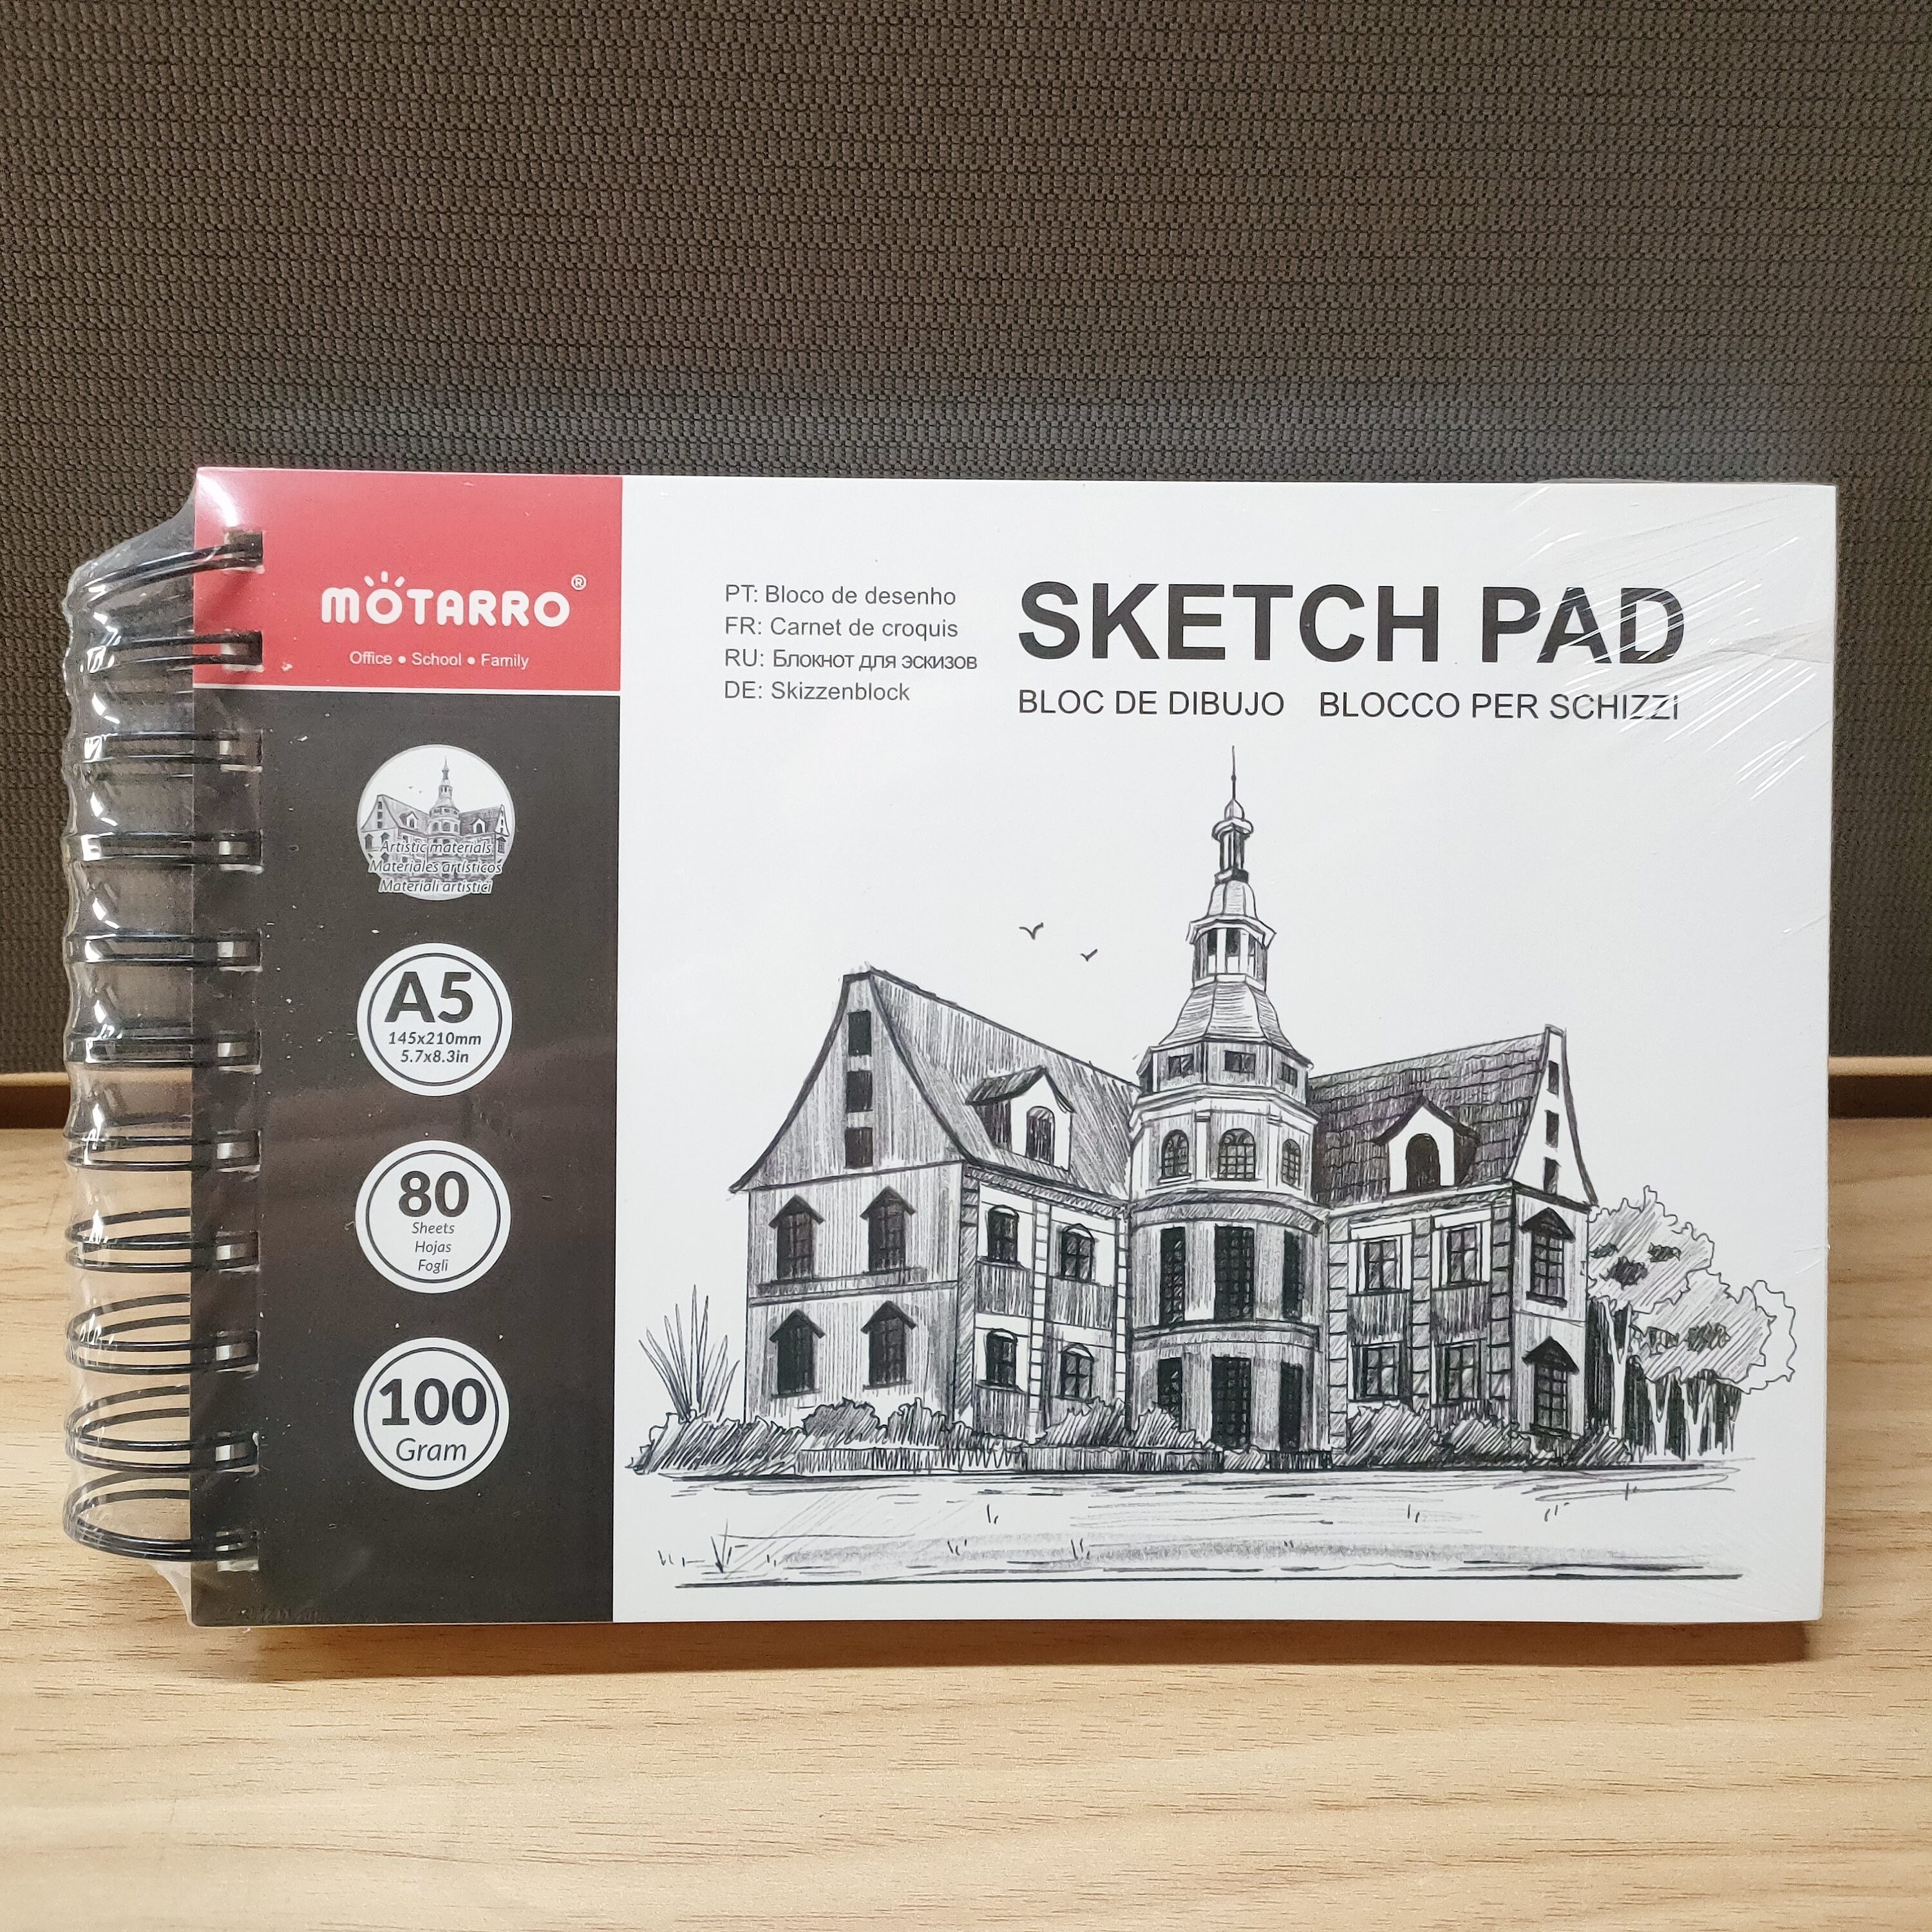 32k/a5/a4/16k Sketch Book /120gsm Thick Drawing Paper Sketch - Temu